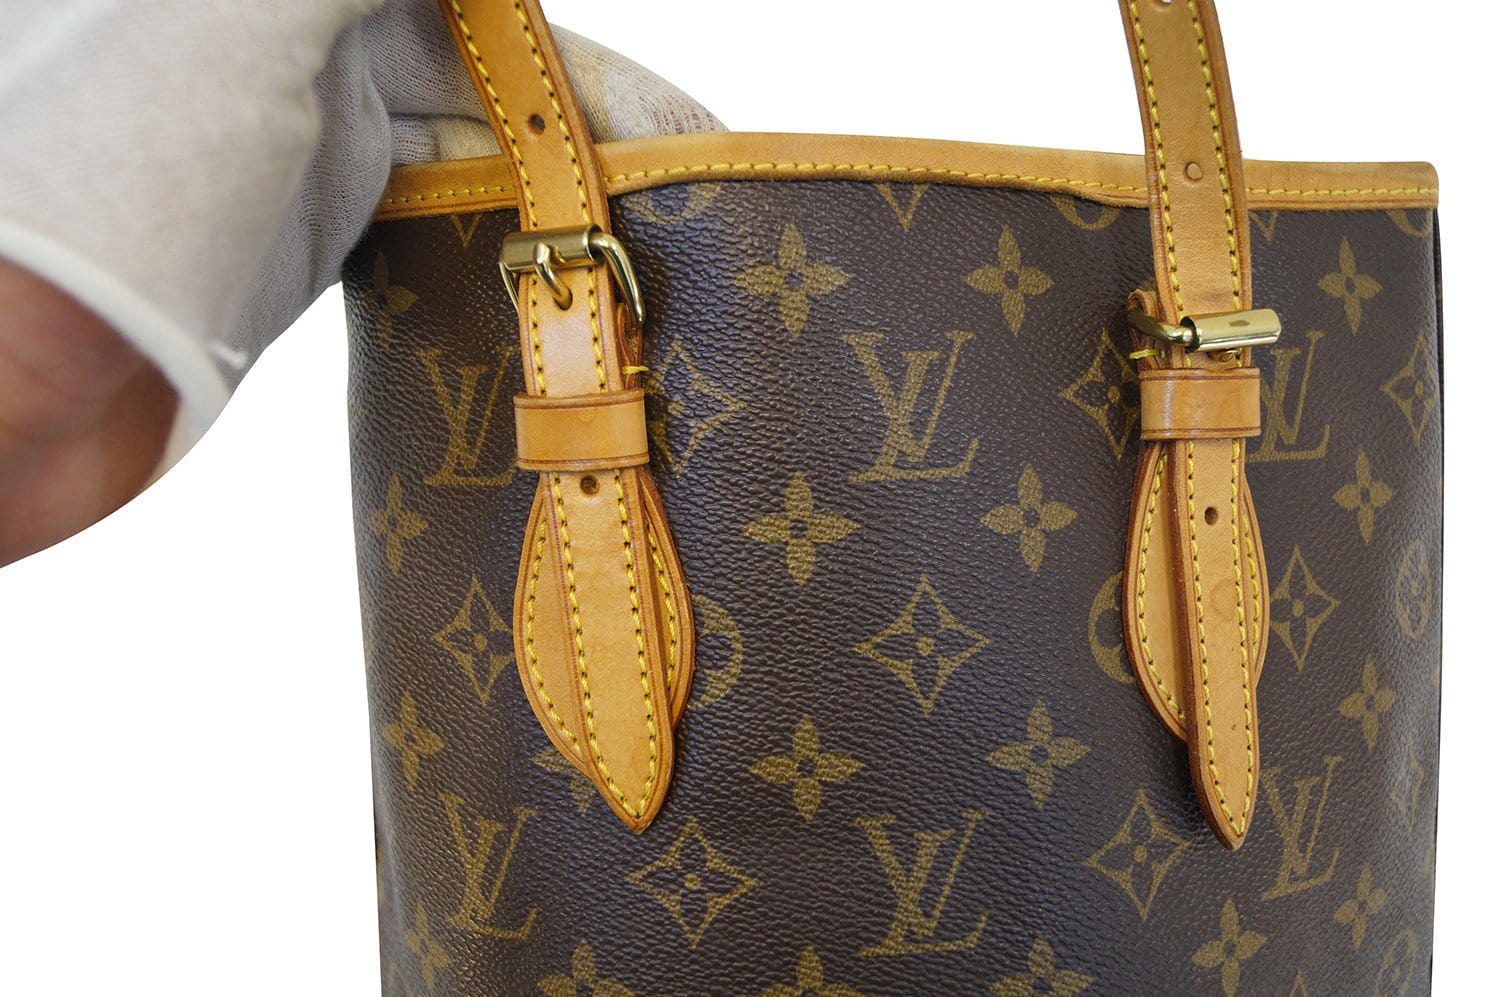 Louis Vuitton Monogram Bucket Flange Handbag Bag